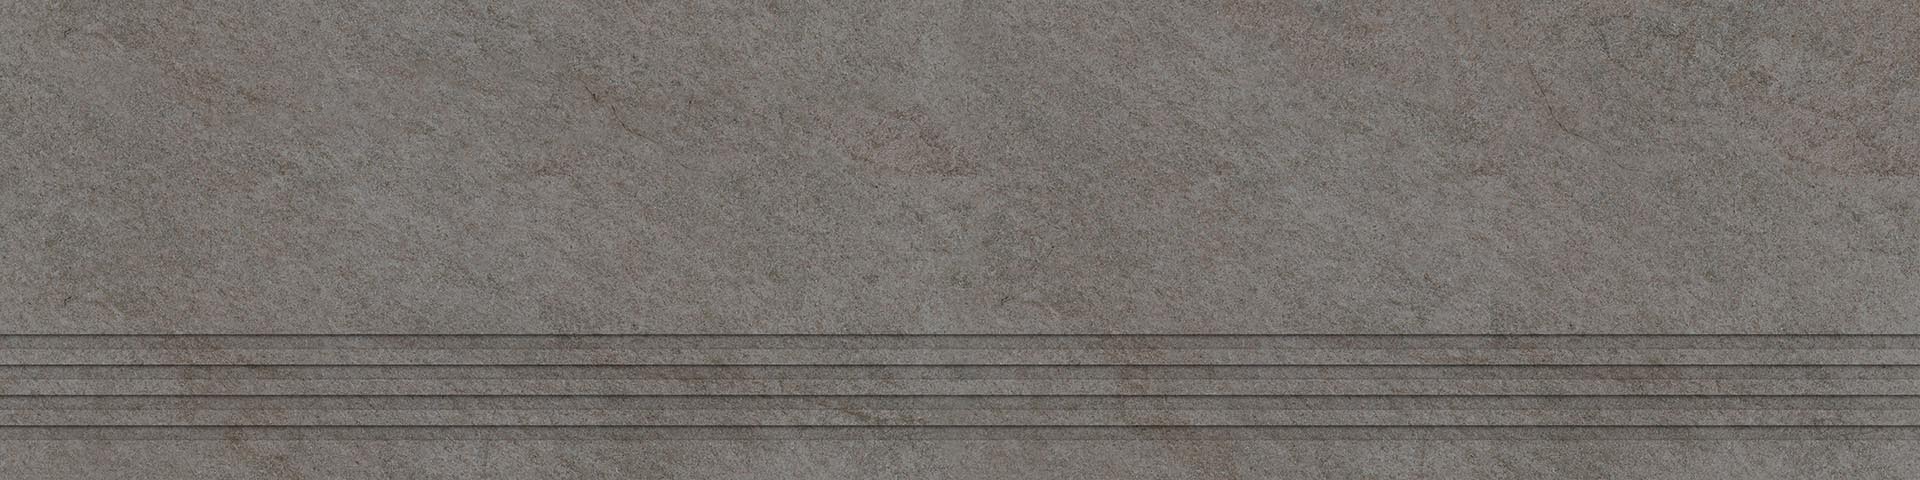 pietra serena antracite xx step tile